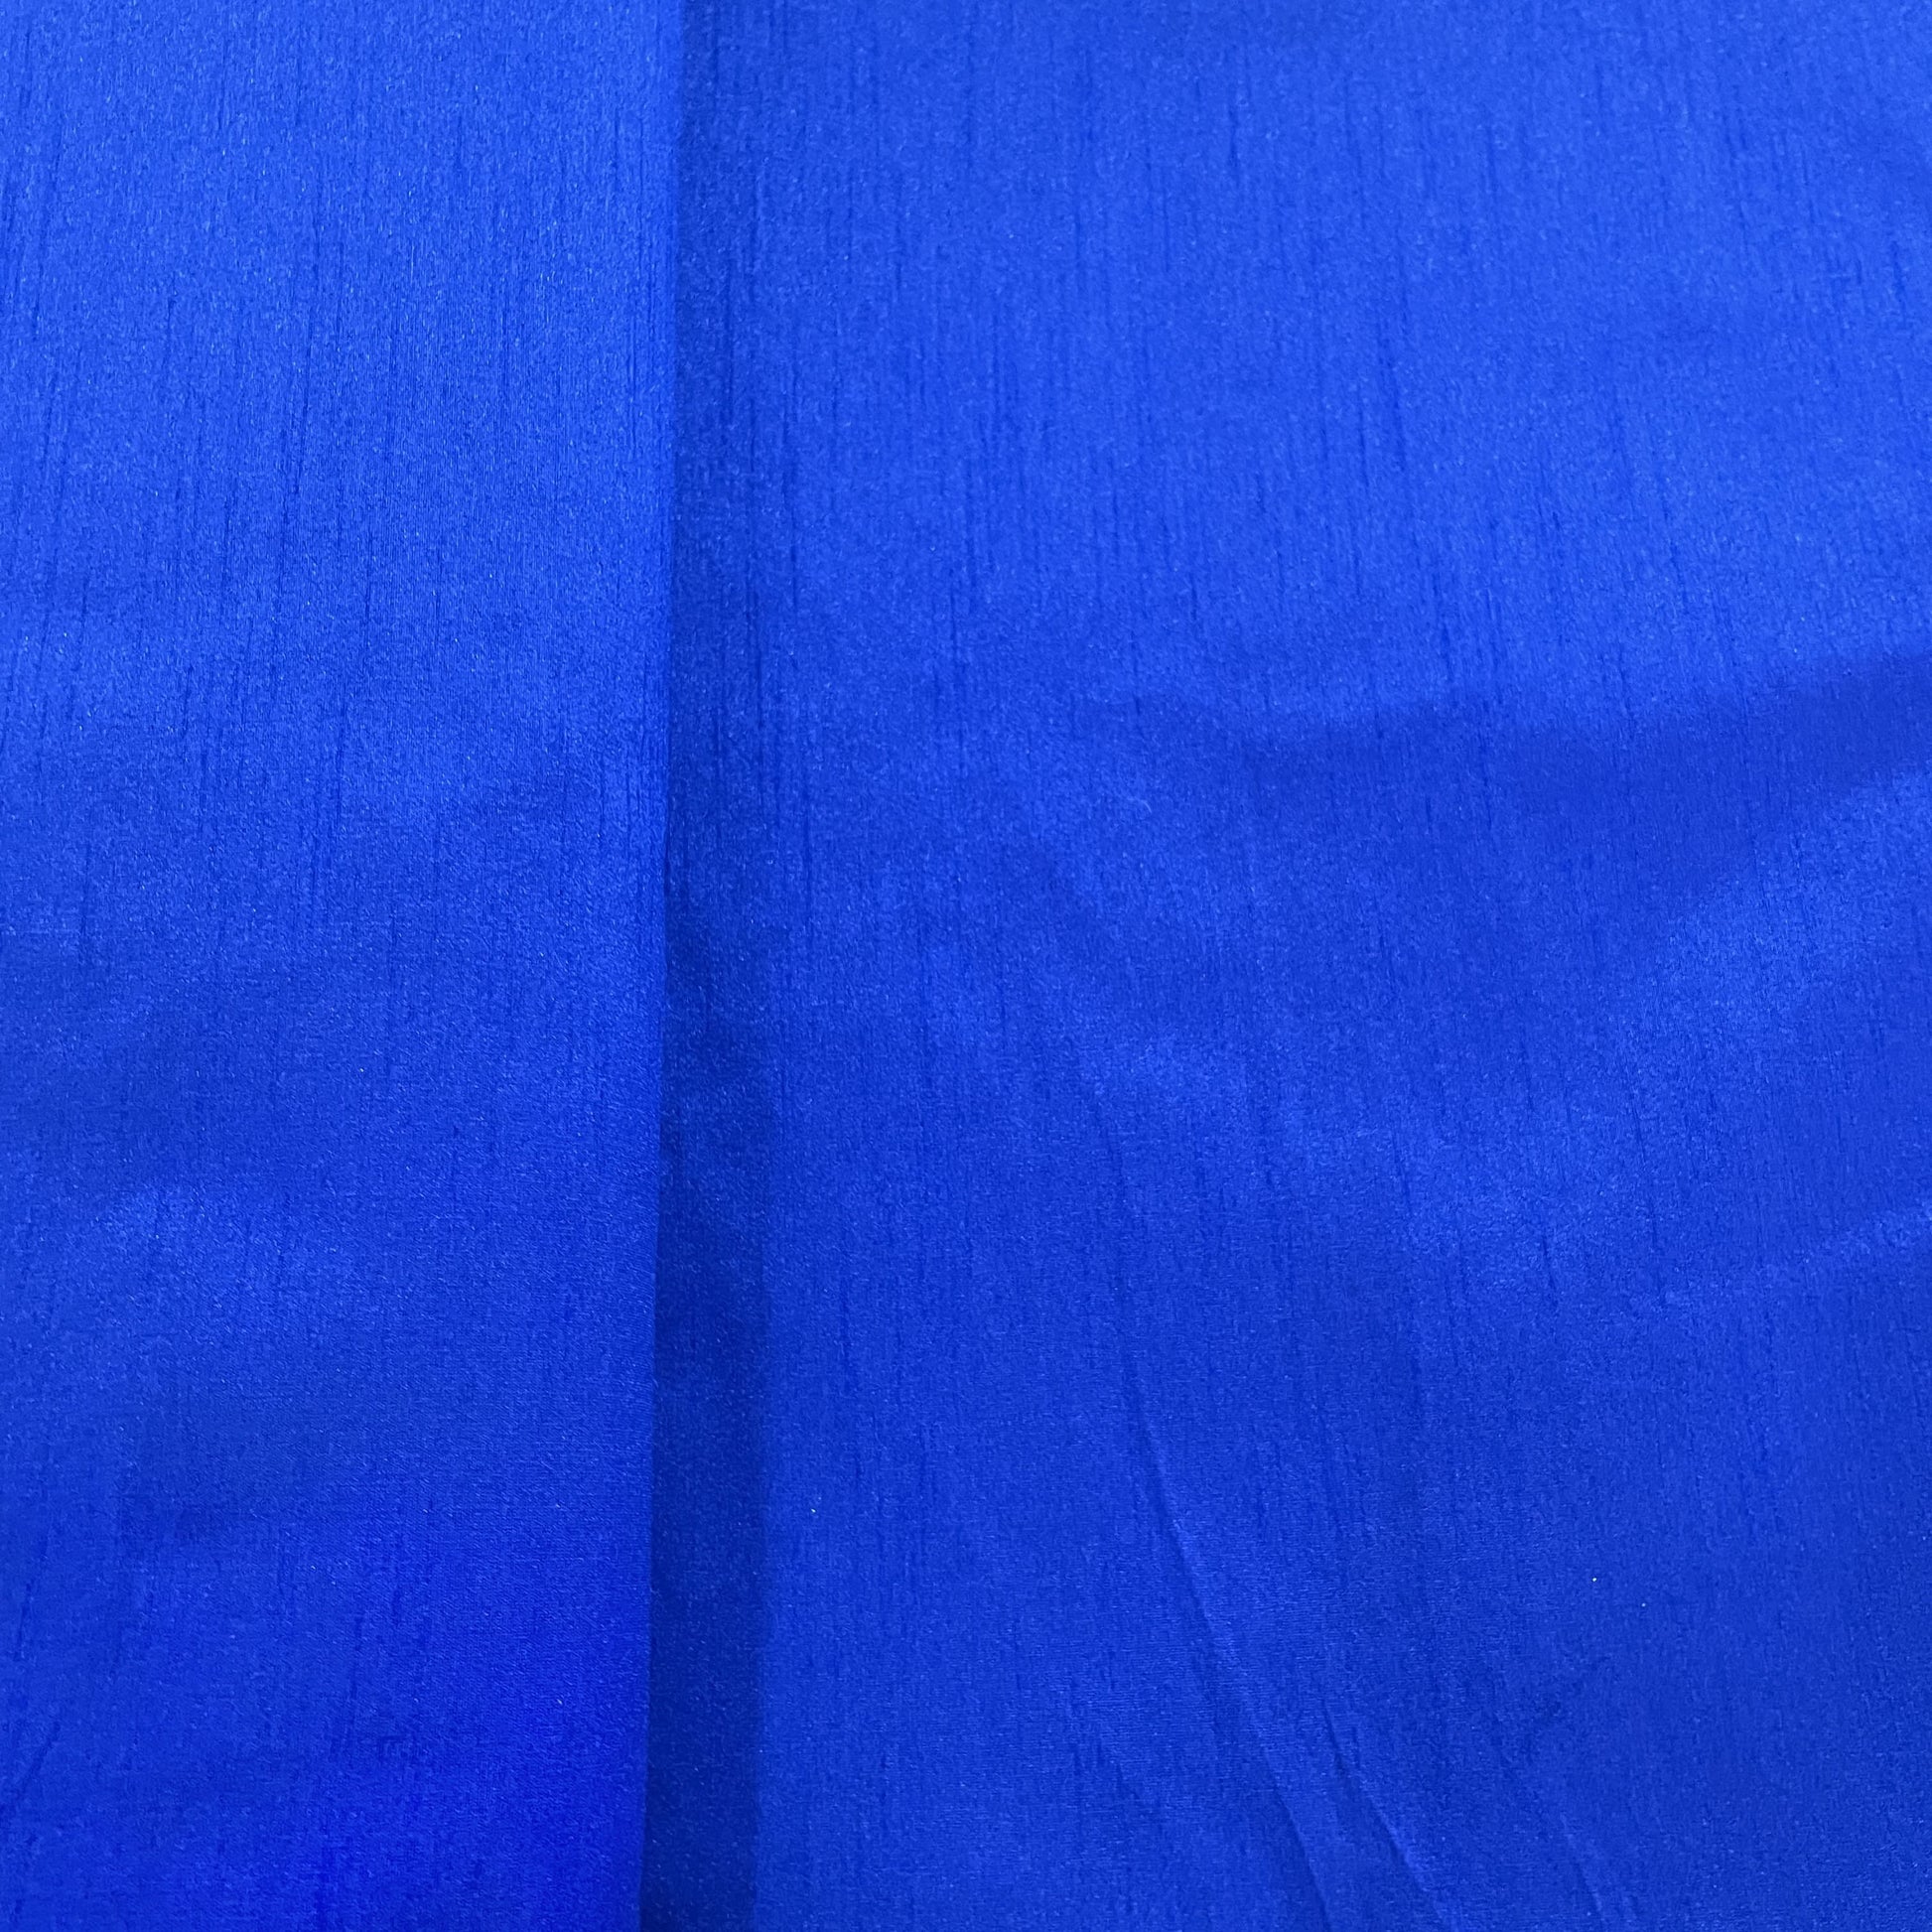 Navy Blue Solid Dupian Silk Fabric